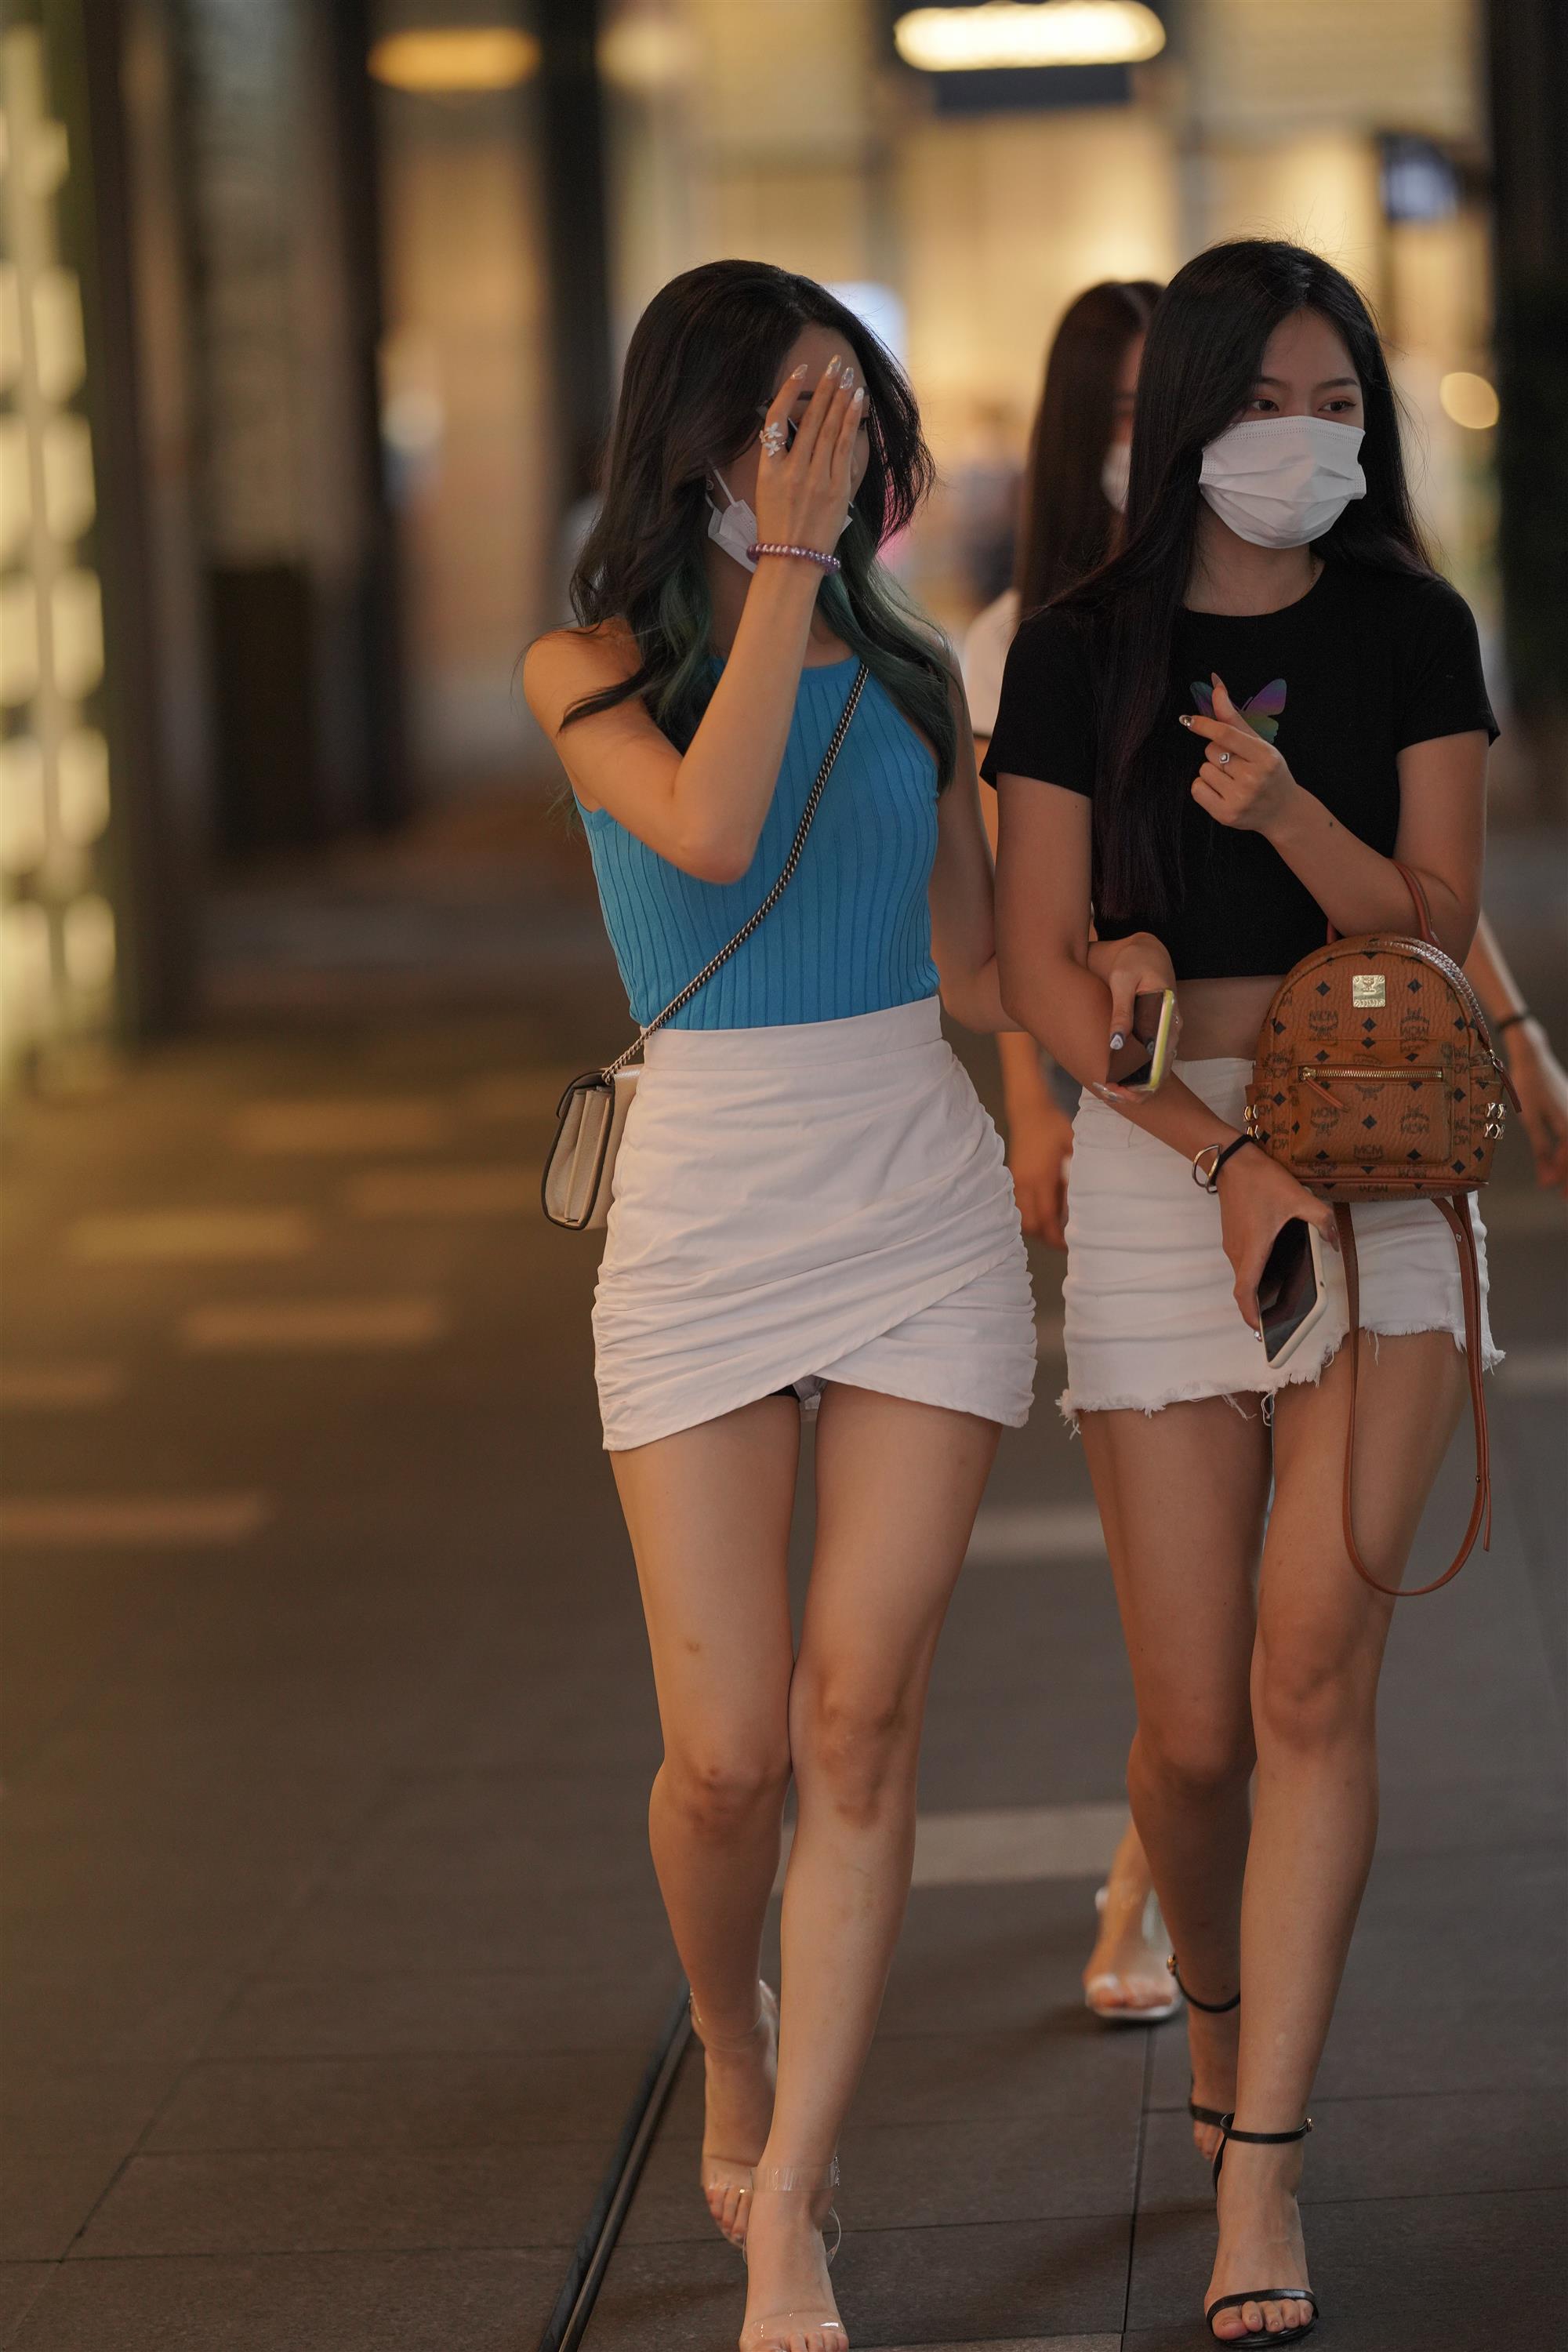 Street Three girls in short skirts - 30.jpg